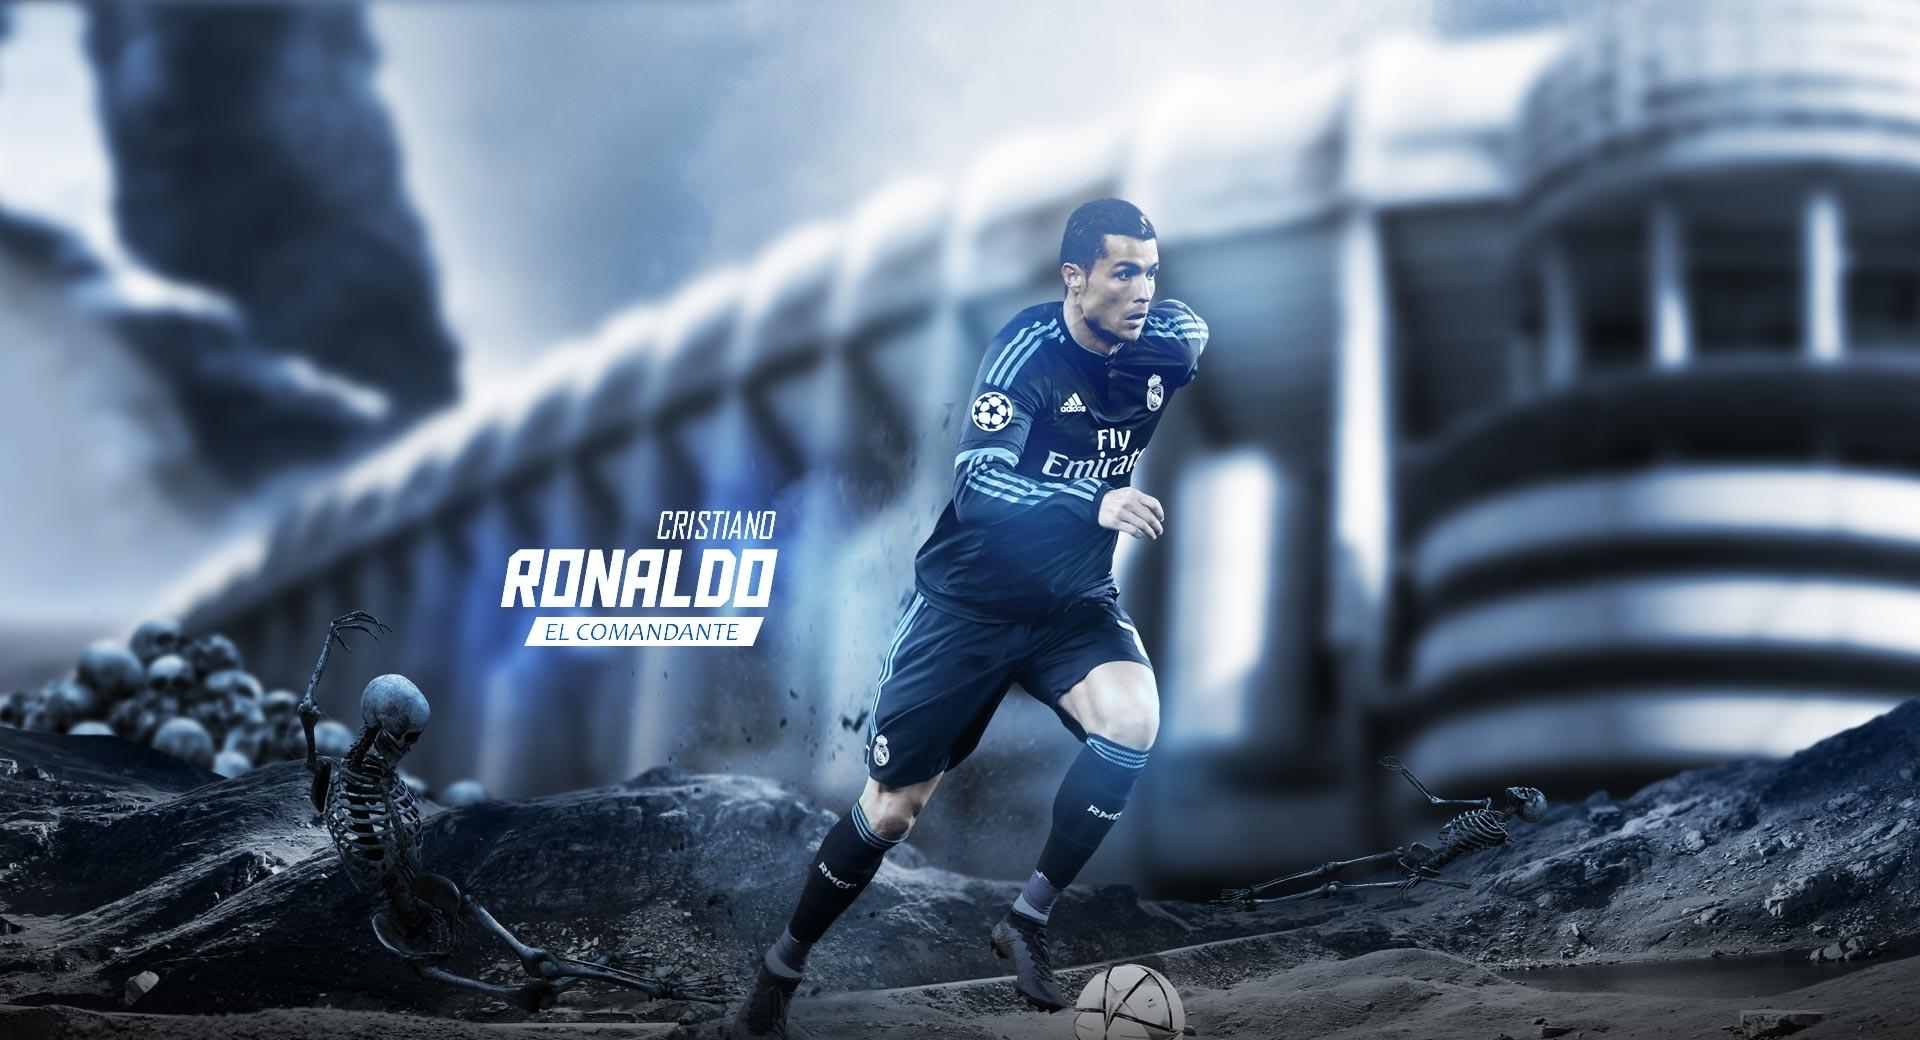 Cristiano Ronaldo - El Comandante at 1280 x 960 size wallpapers HD quality